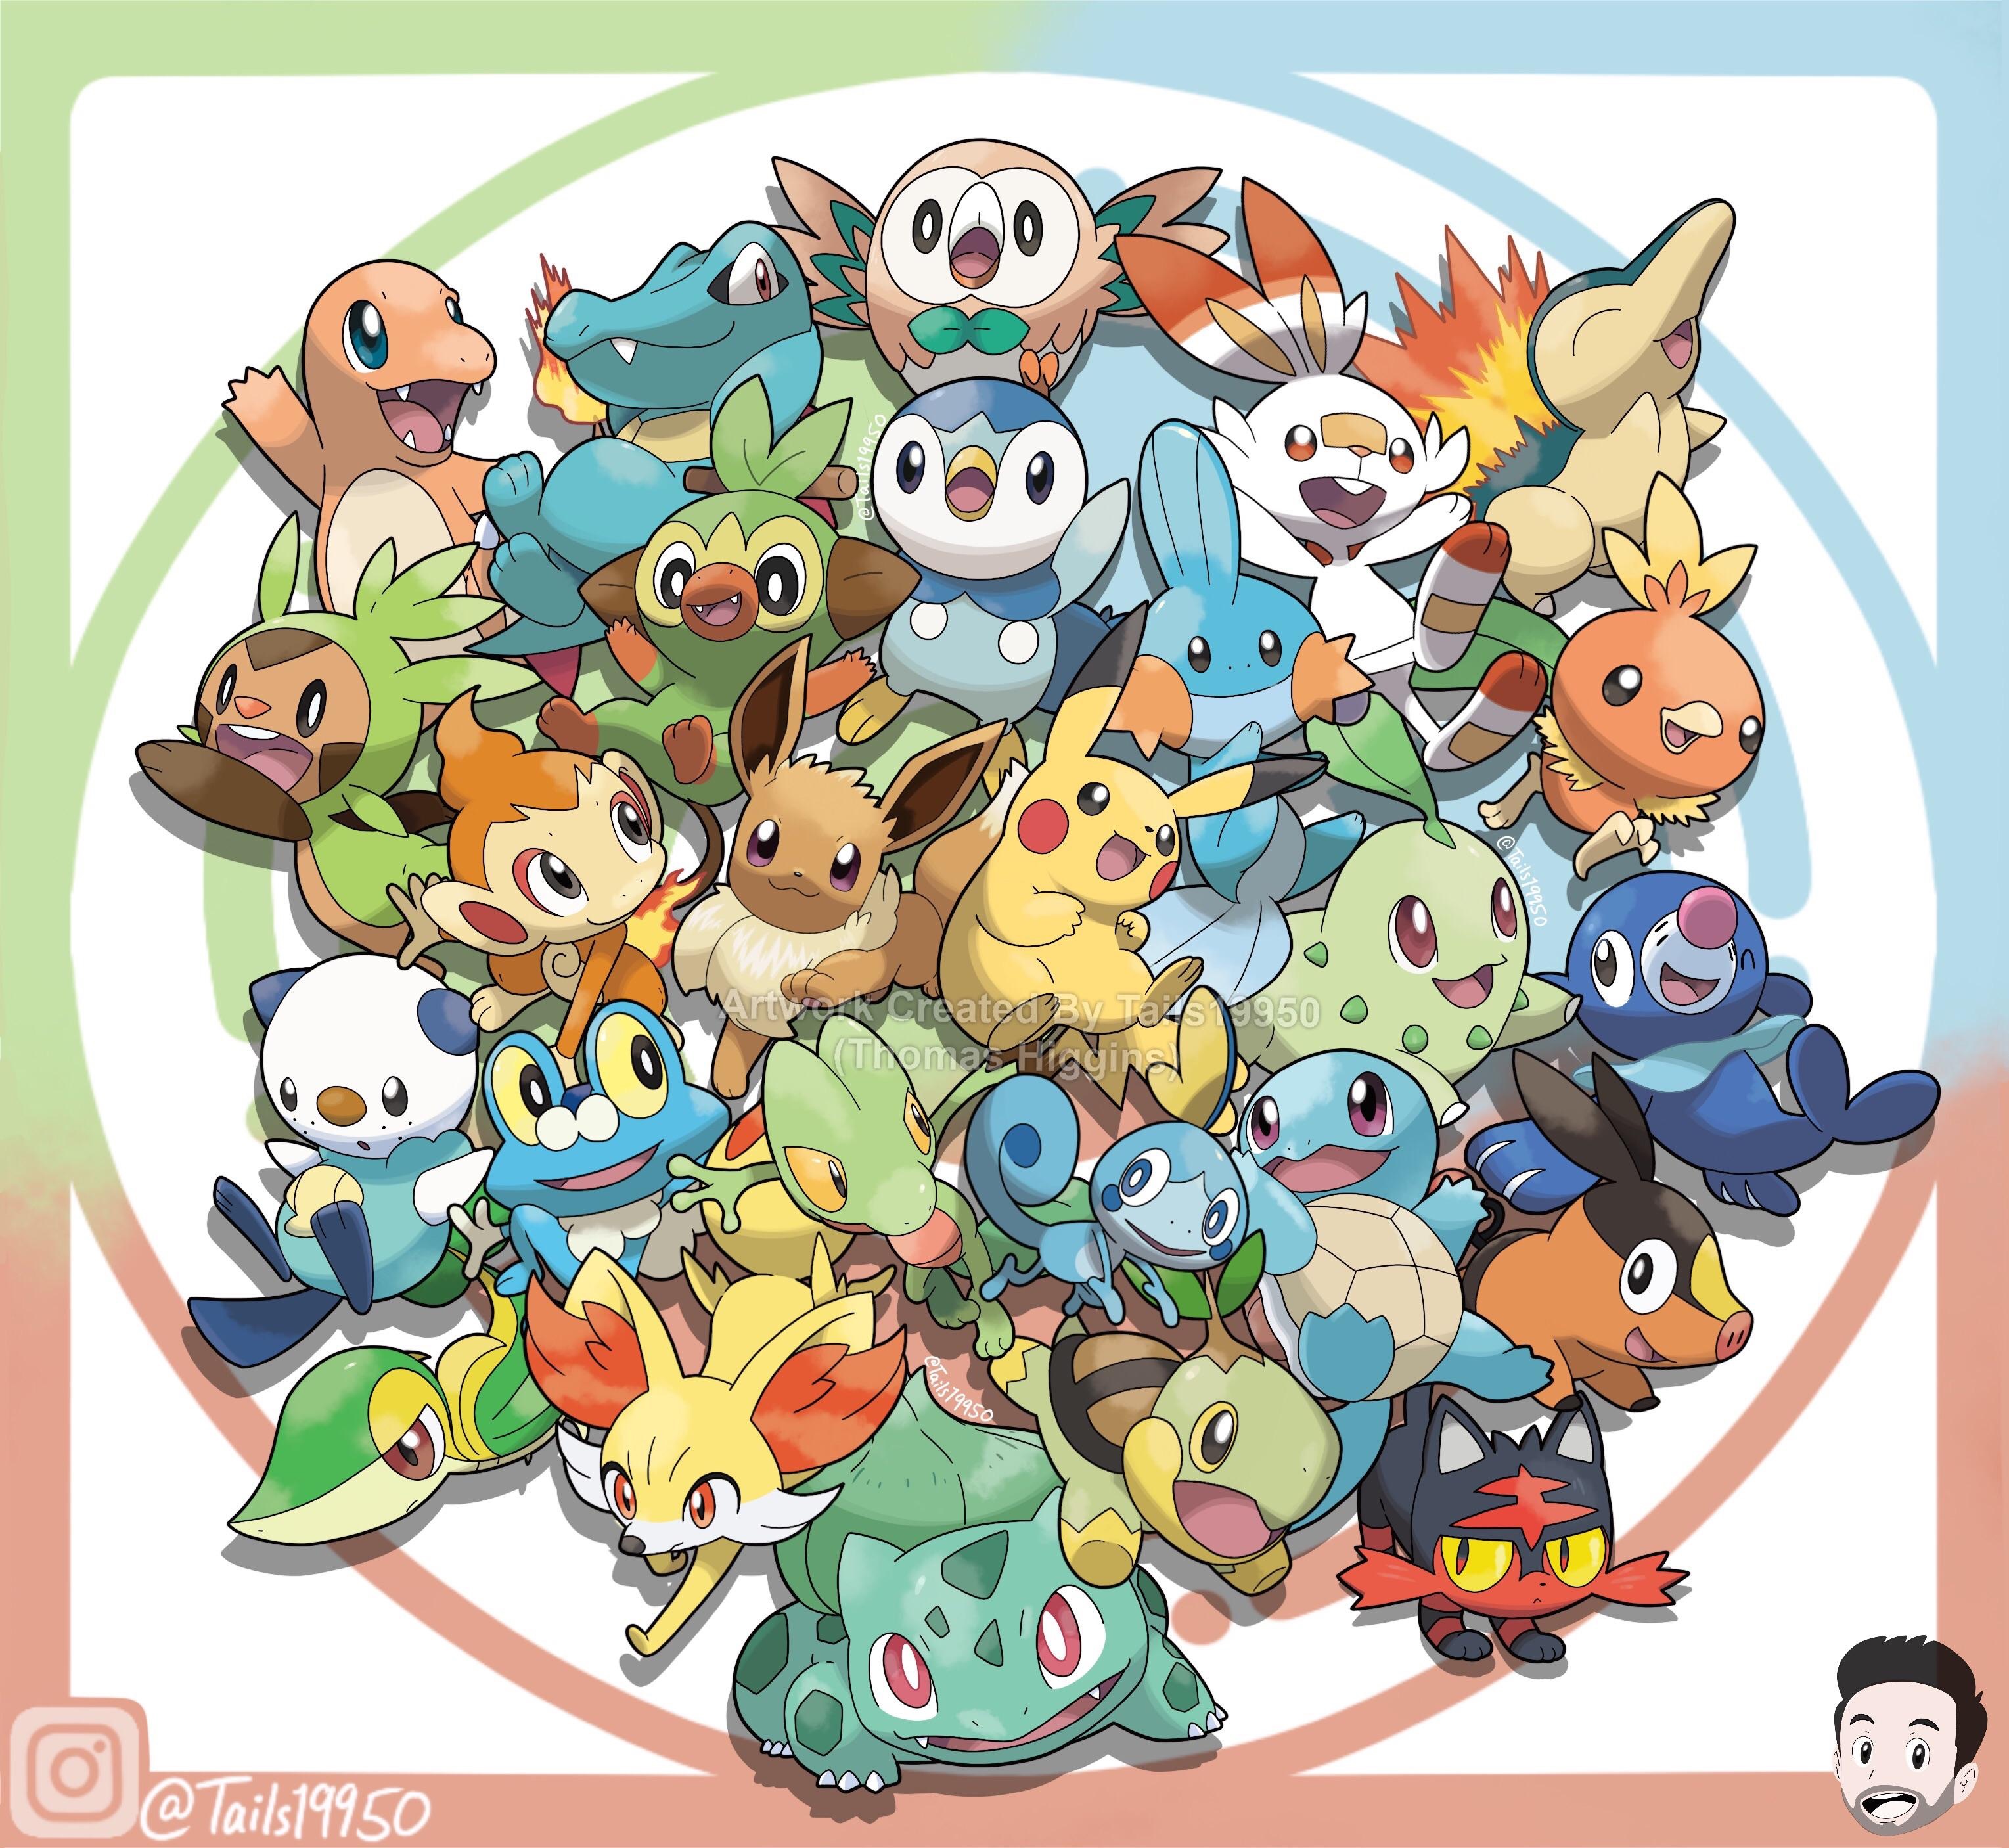 MultiCrafting All Included: Universo do Mundo Pokémon